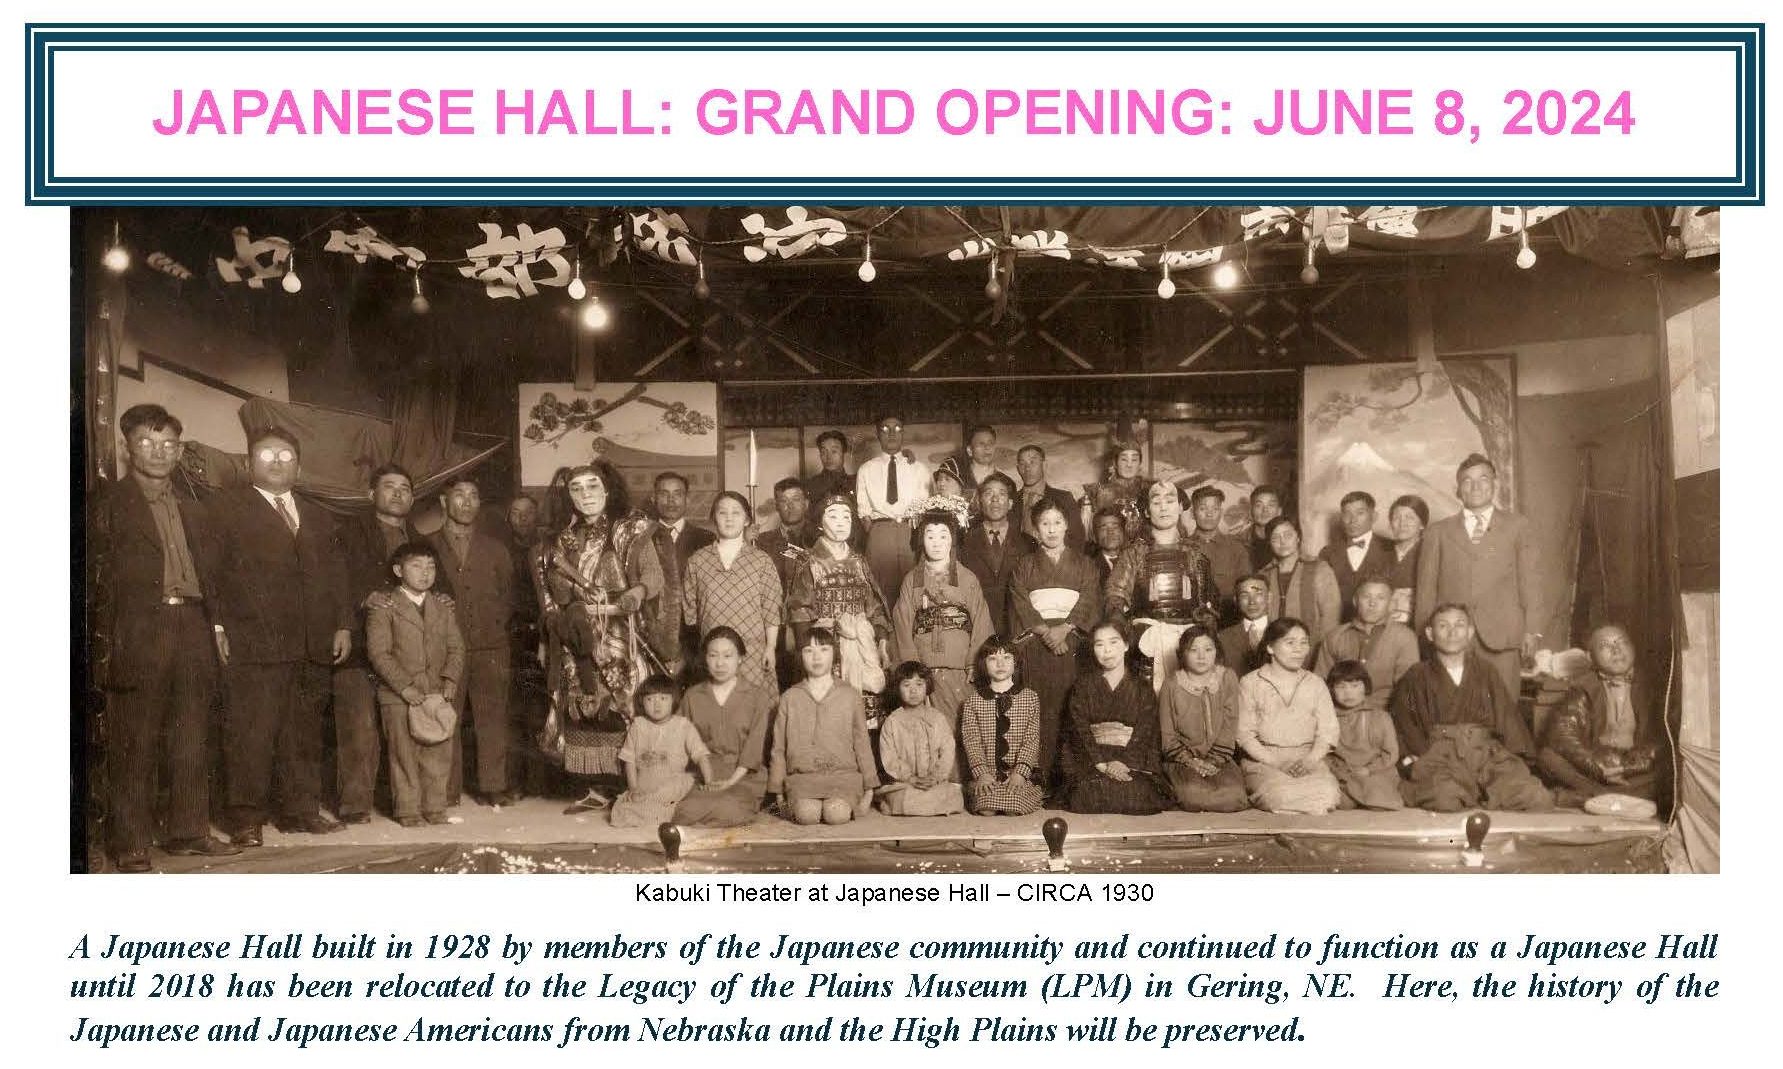 Japanese Hall Grand Opening June 8, 2024